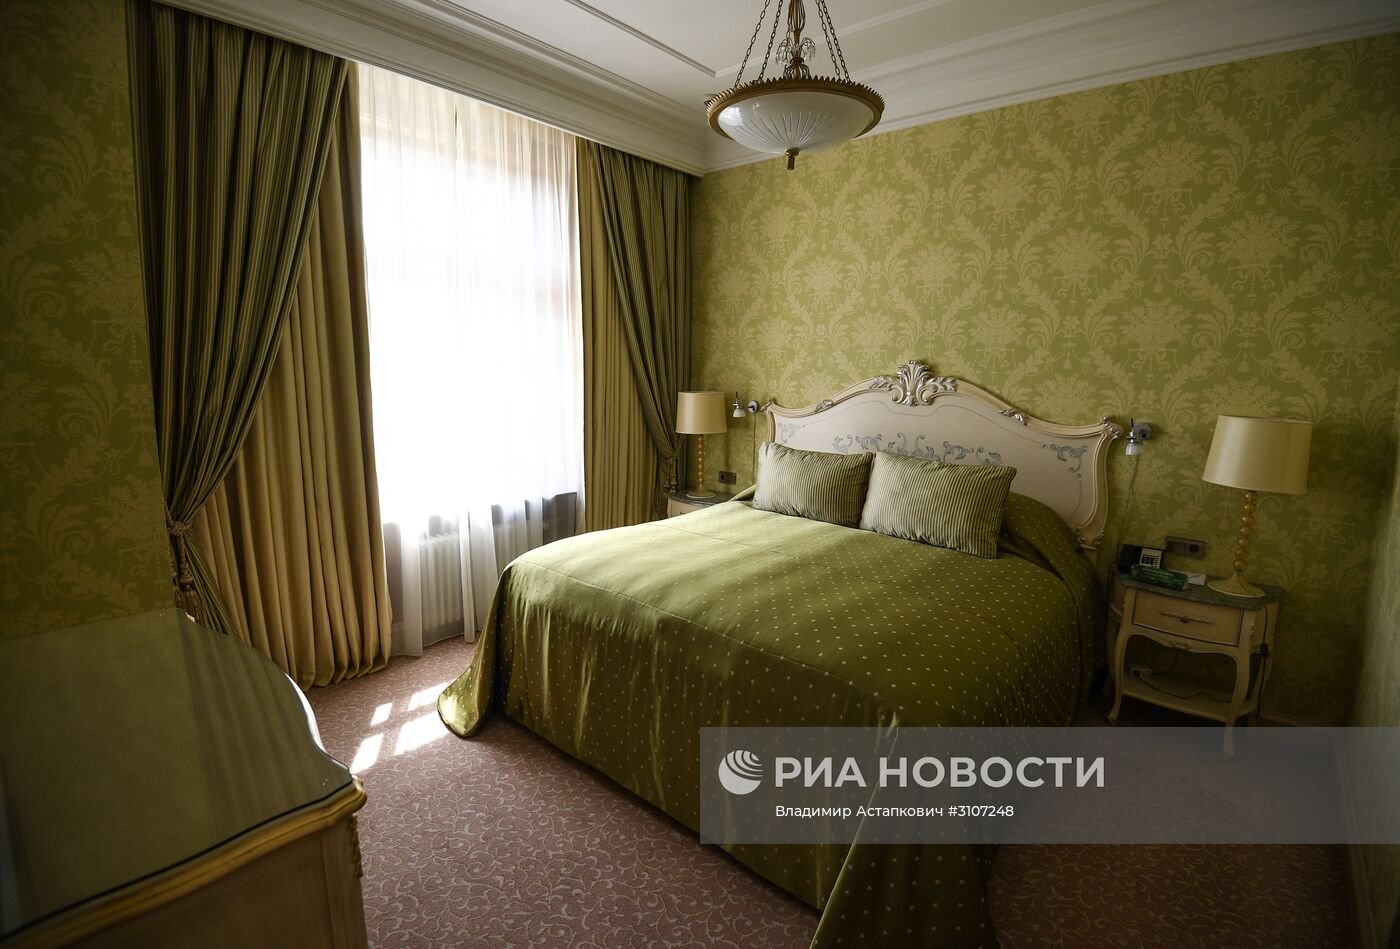 Гостиница "Украина" в предверии 60-летнего юбилея